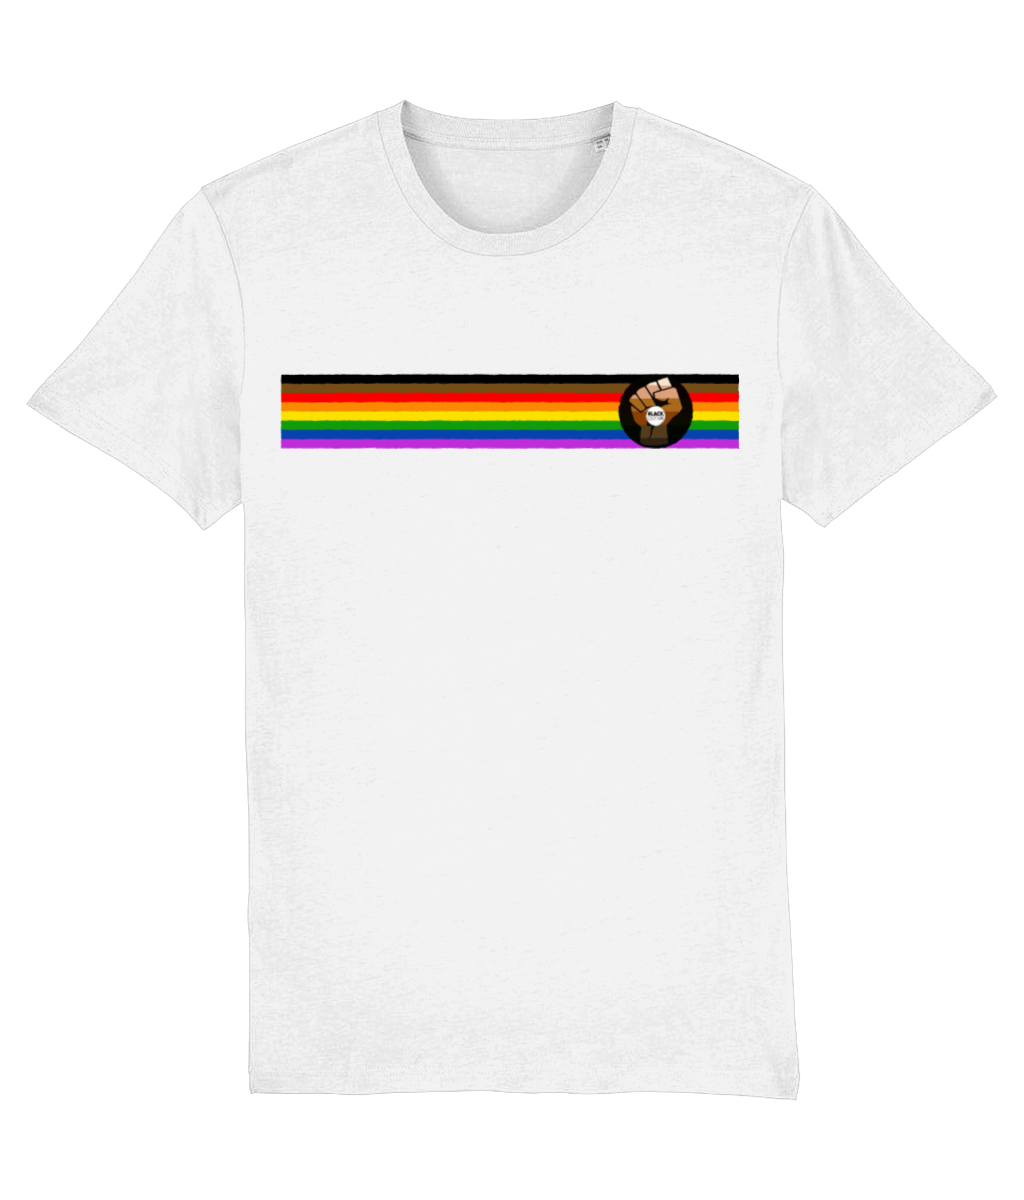 Inclusive Rainbow Stripe Organic Cotton T-shirt